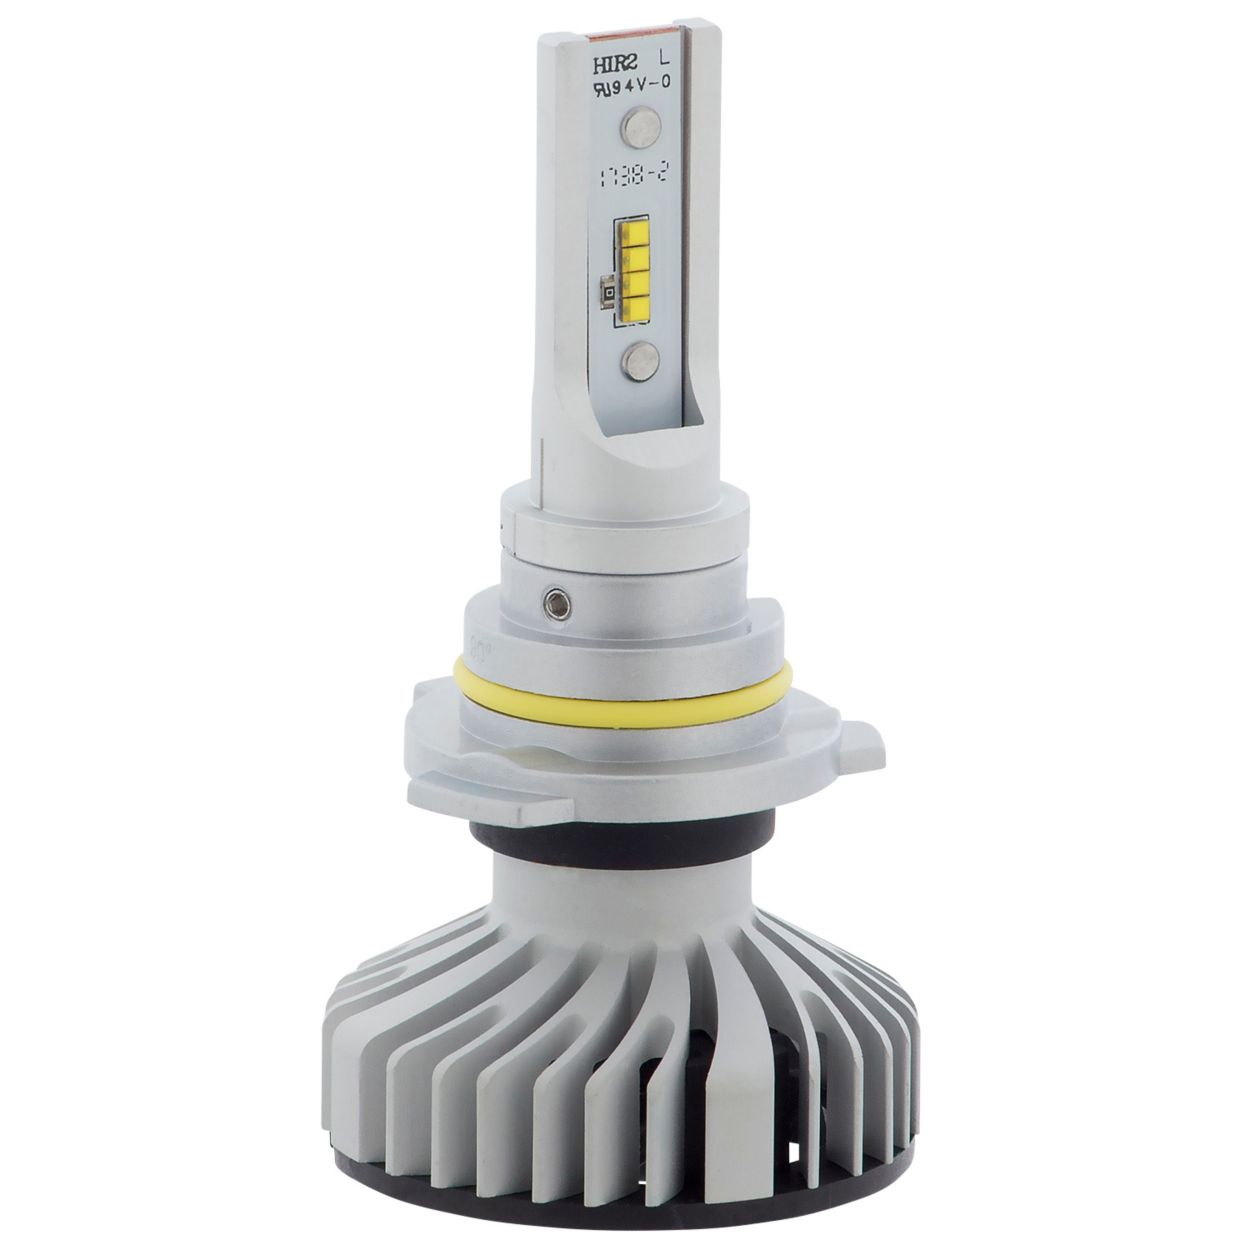 X-tremeUltinon LED car headlight bulb 9012XUX2